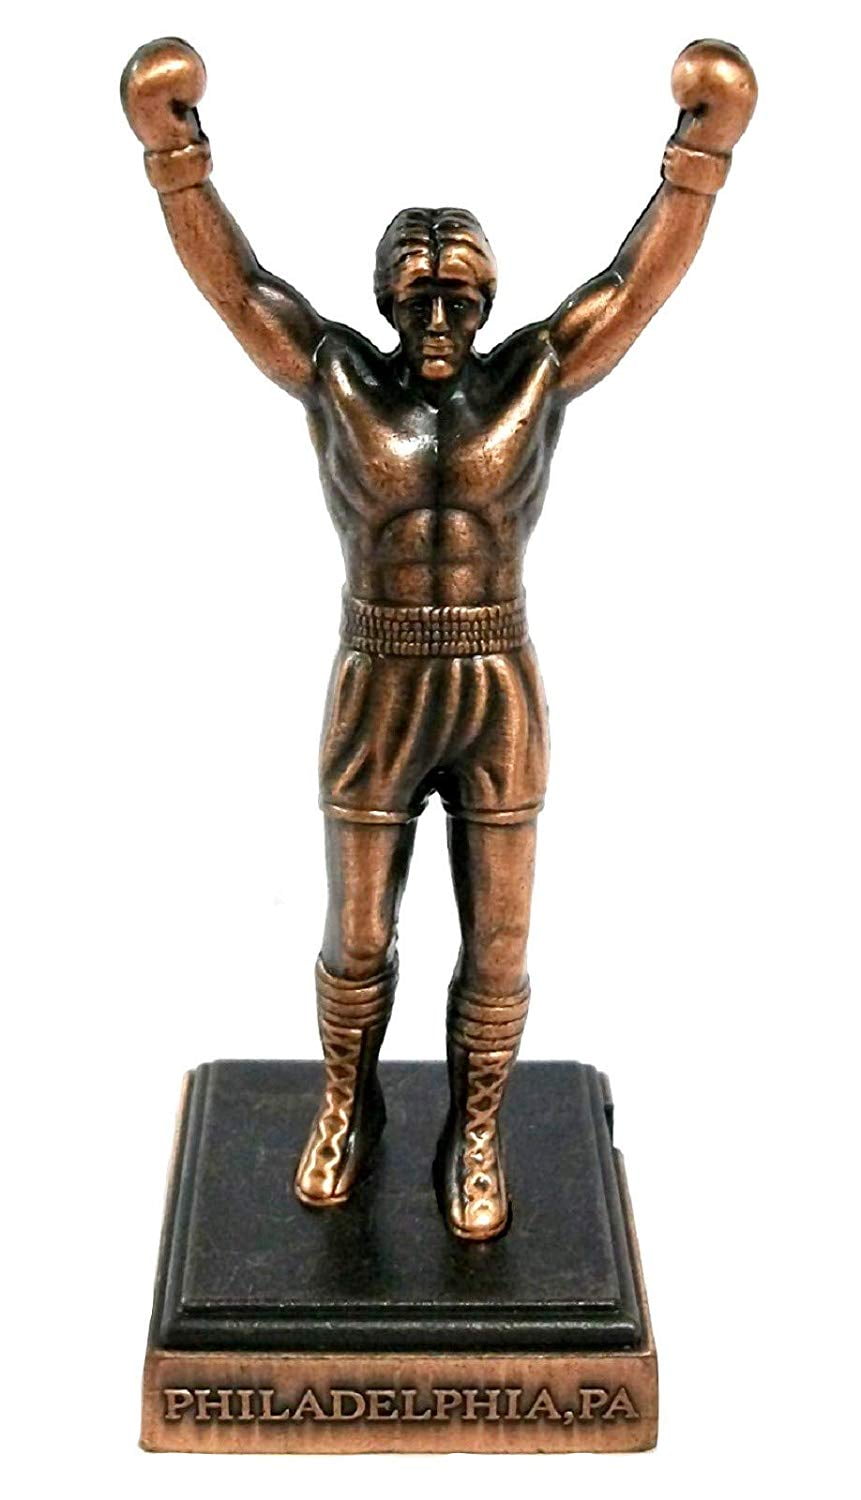 Rocky Statue Die Cast Metal Collectible Pencil Sharpener